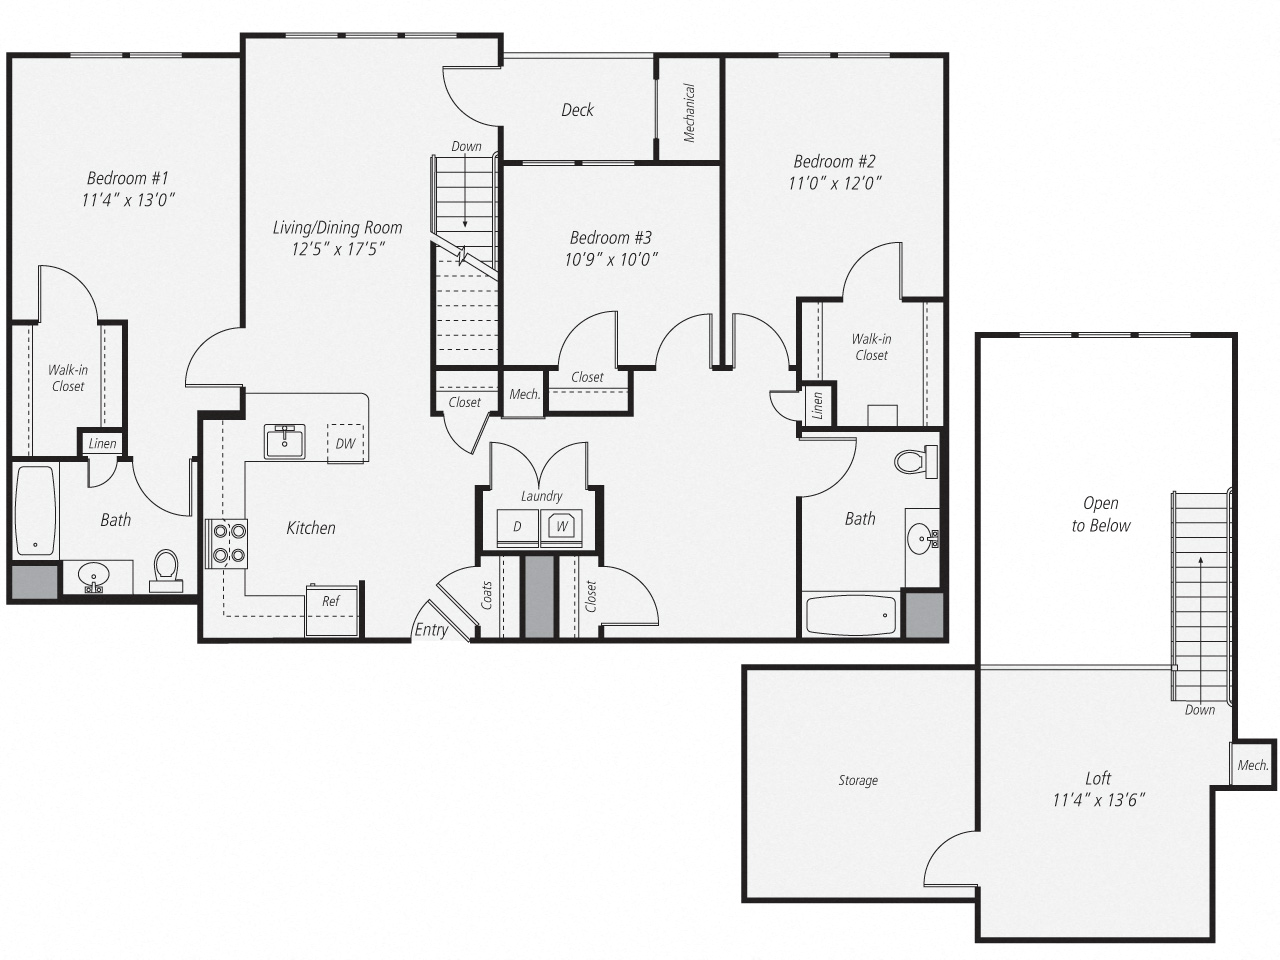 Floorplan for Apartment #414, 3 bedroom unit at Halstead Norwalk